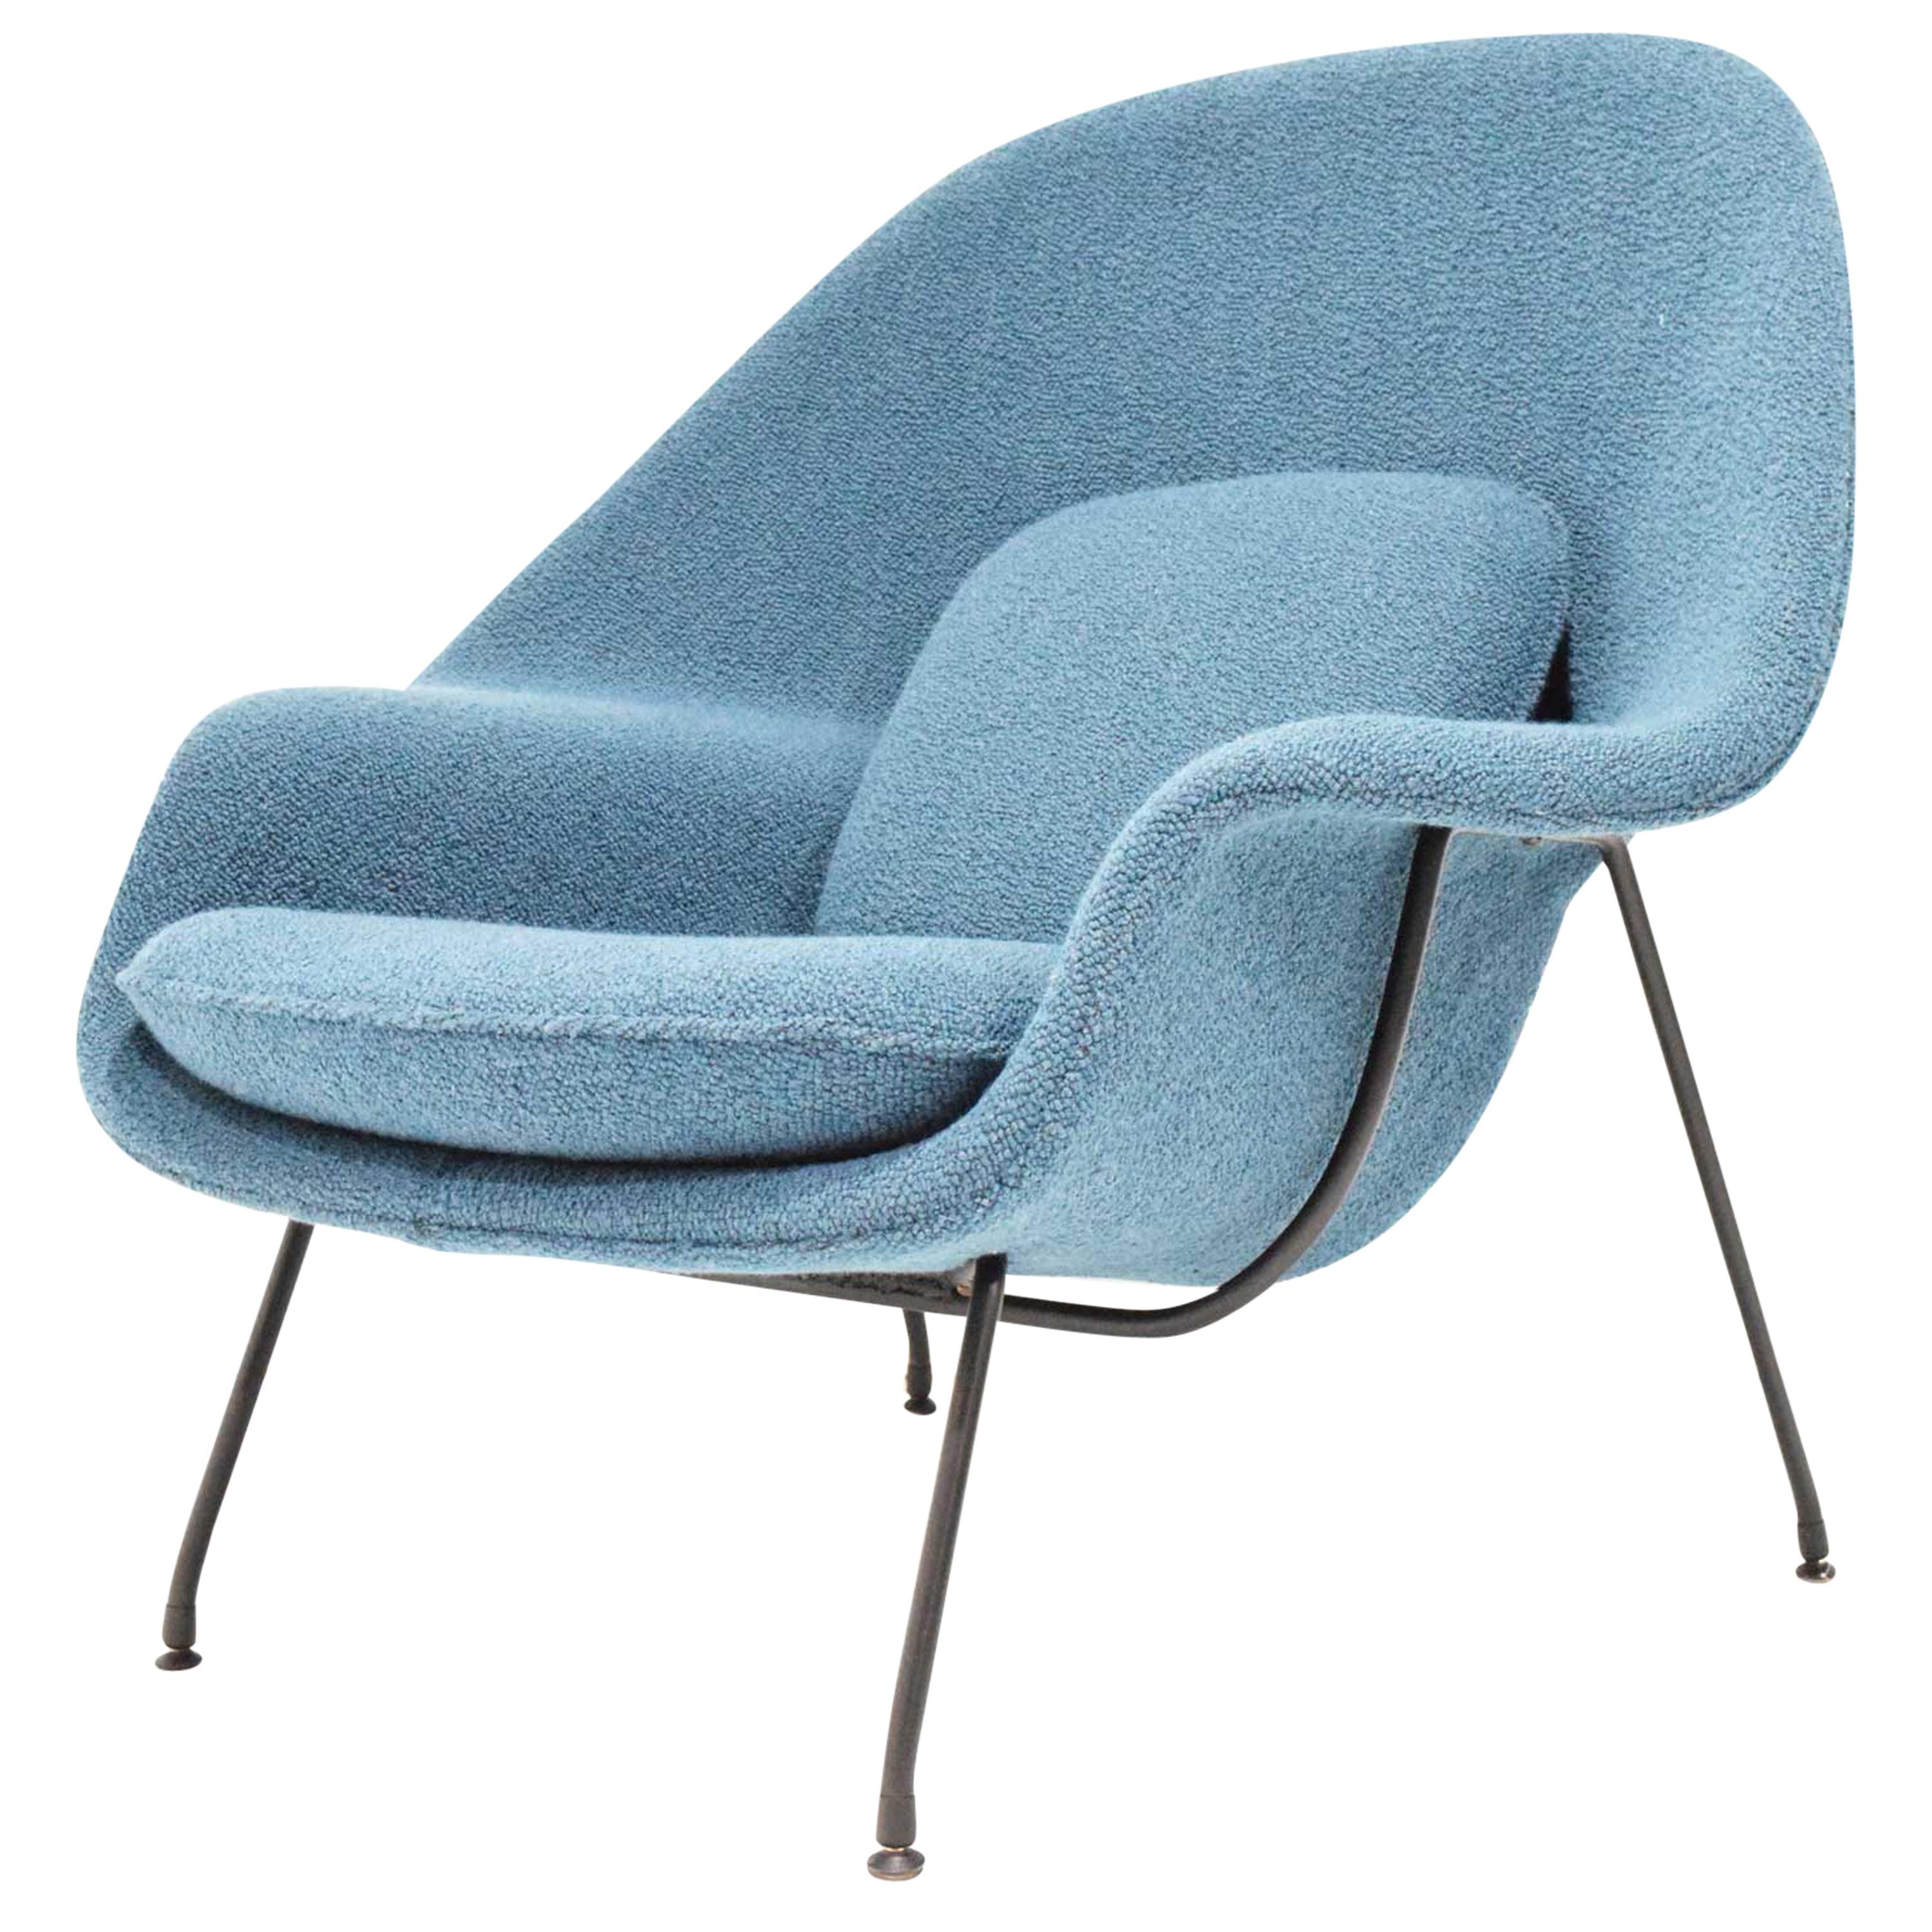 Eero Saarinen for Knoll Early Womb Chair in new Larsen Upholstery